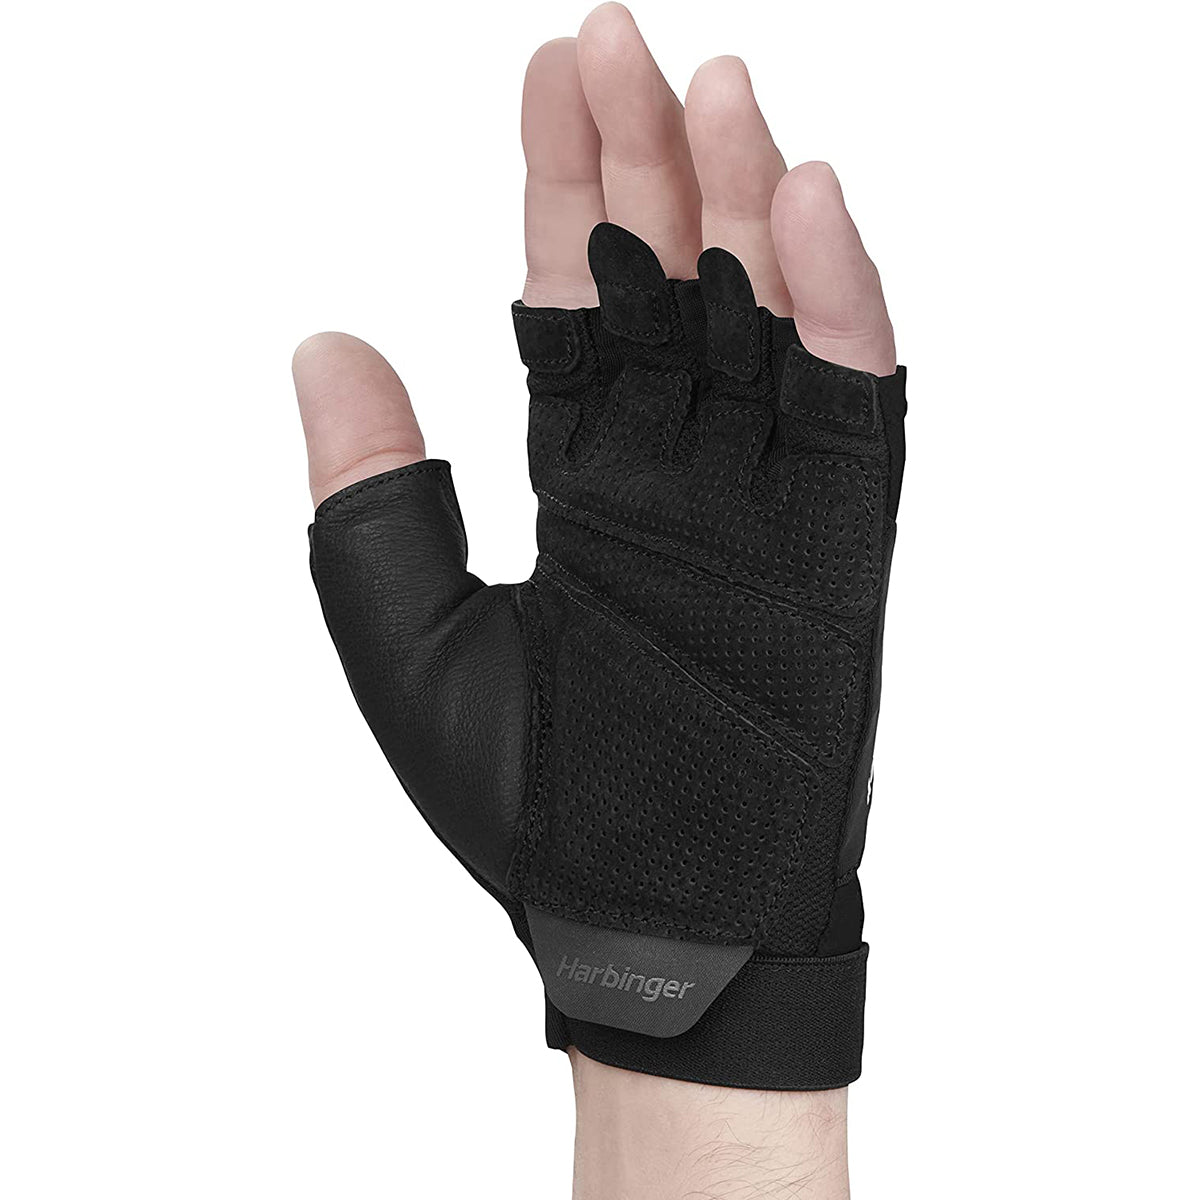 Harbinger Unisex FlexFit Weight Lifting Gloves - Black Harbinger